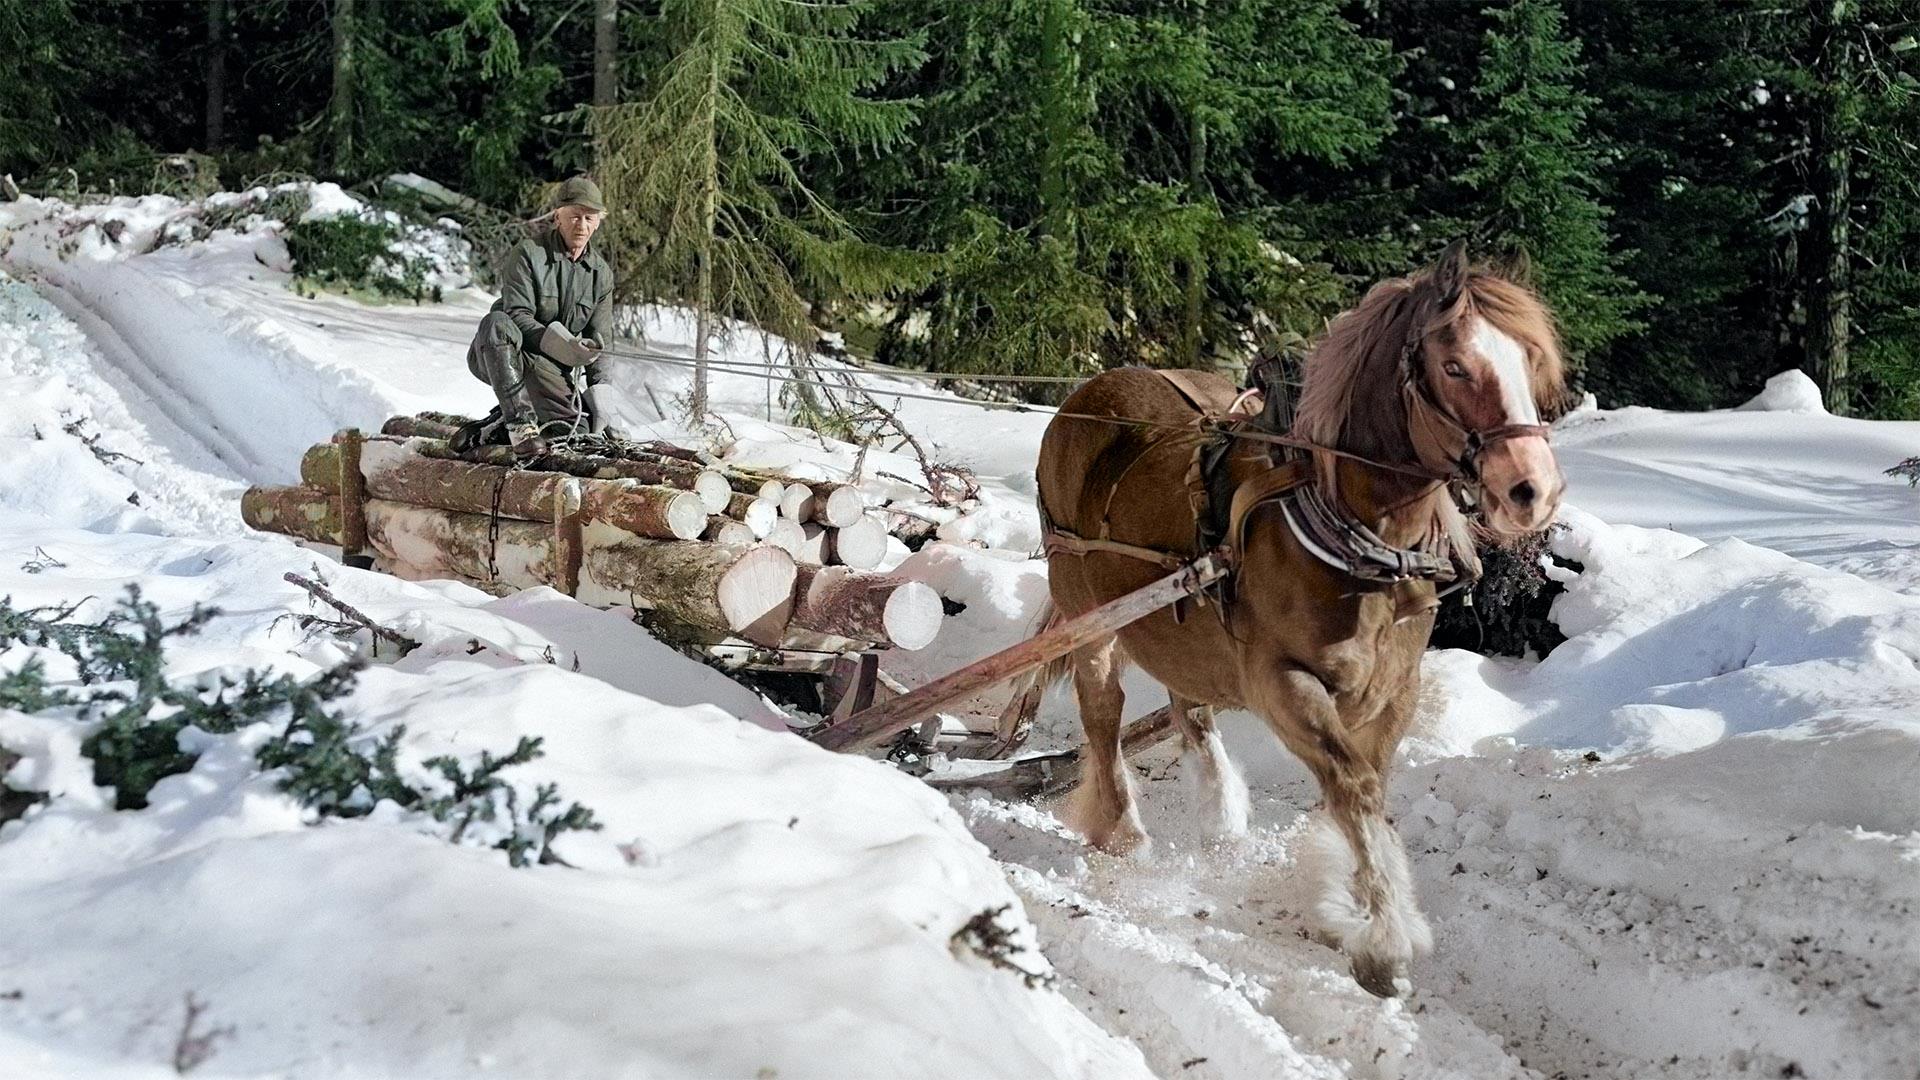 Horse and lumber at Norsk Skogmuseum